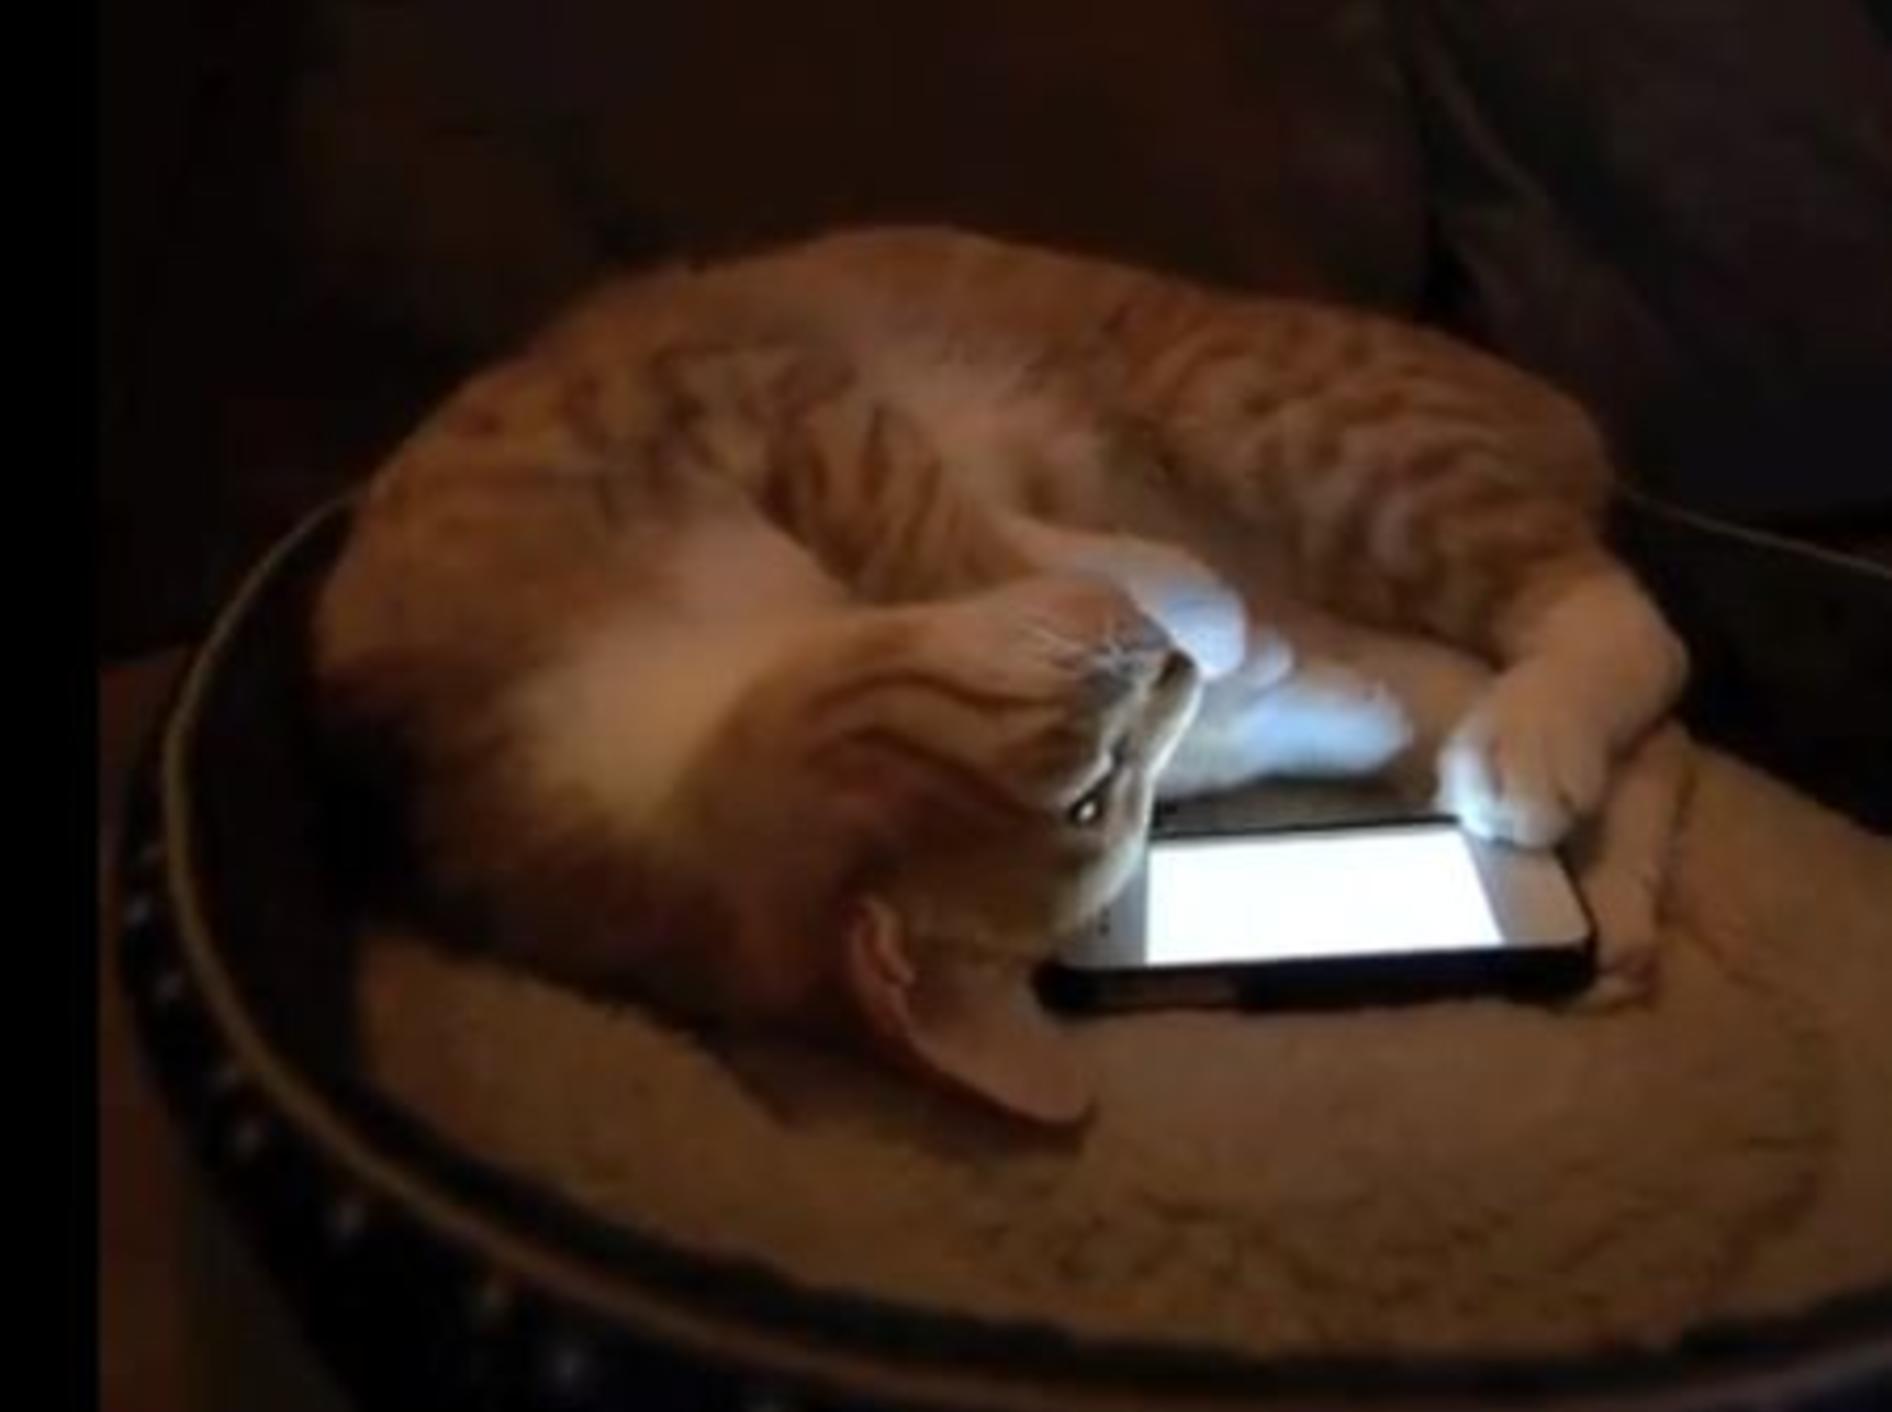 Katze City spielt mit iPhone - Bild: Youtube / CitytheKitty